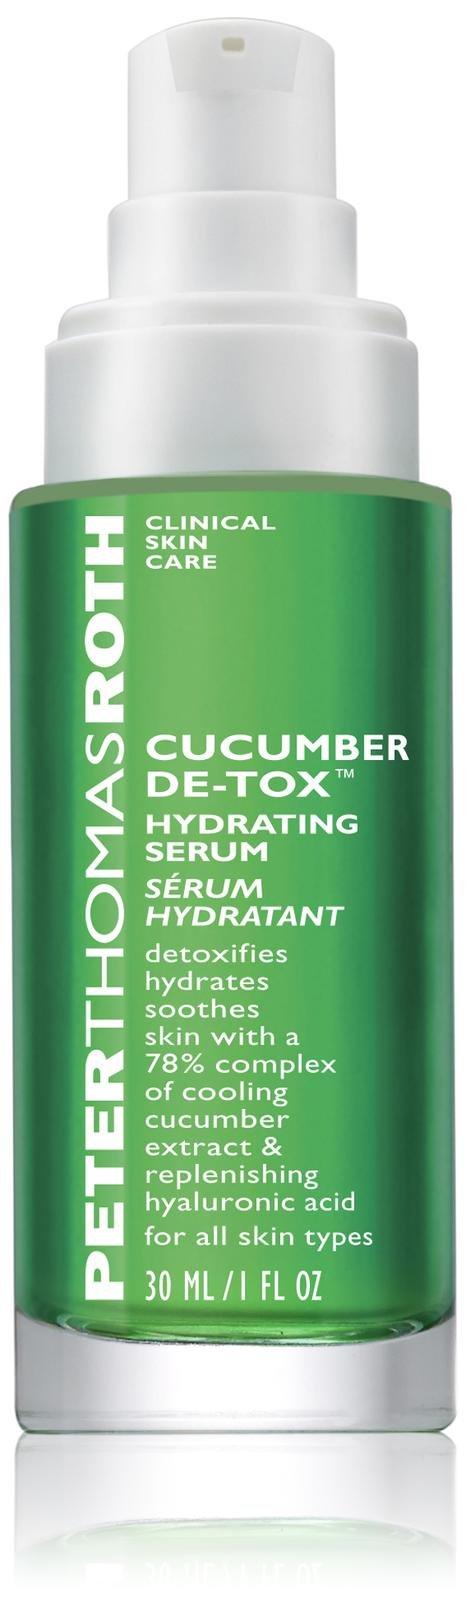 Peter Thomas Roth Cucumber Detox Hydrating Serum